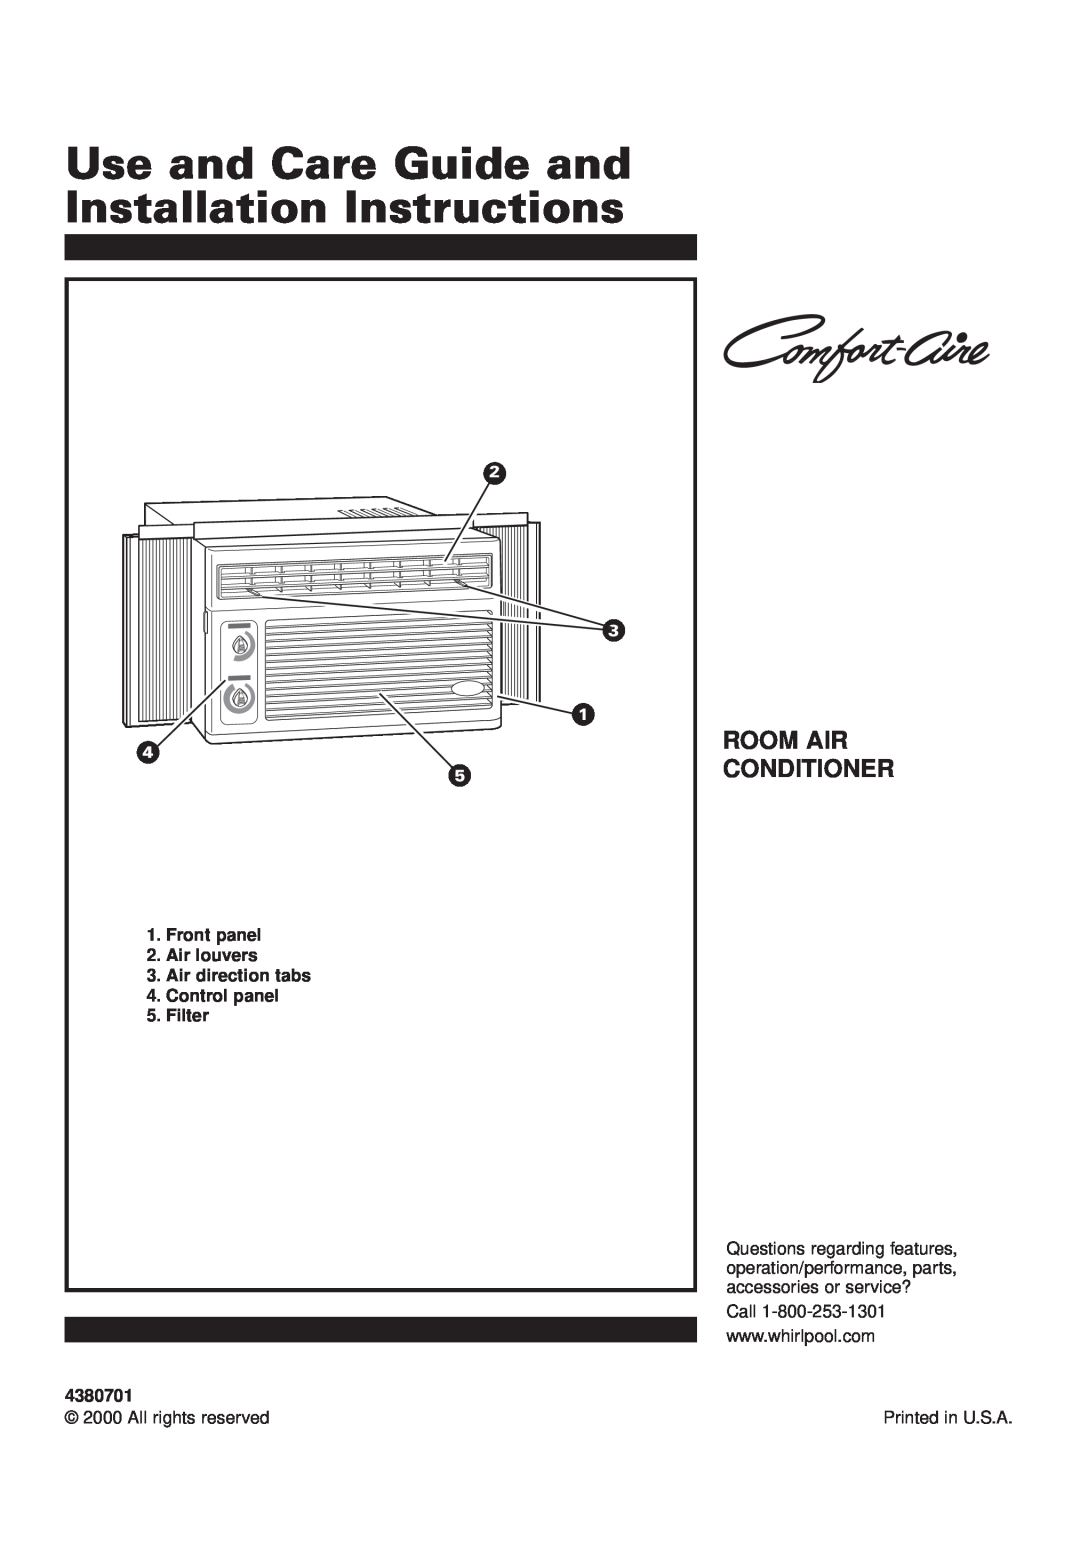 Whirlpool RA51K0 installation instructions Use and Care Guide and Installation Instructions, Room Air Conditioner 